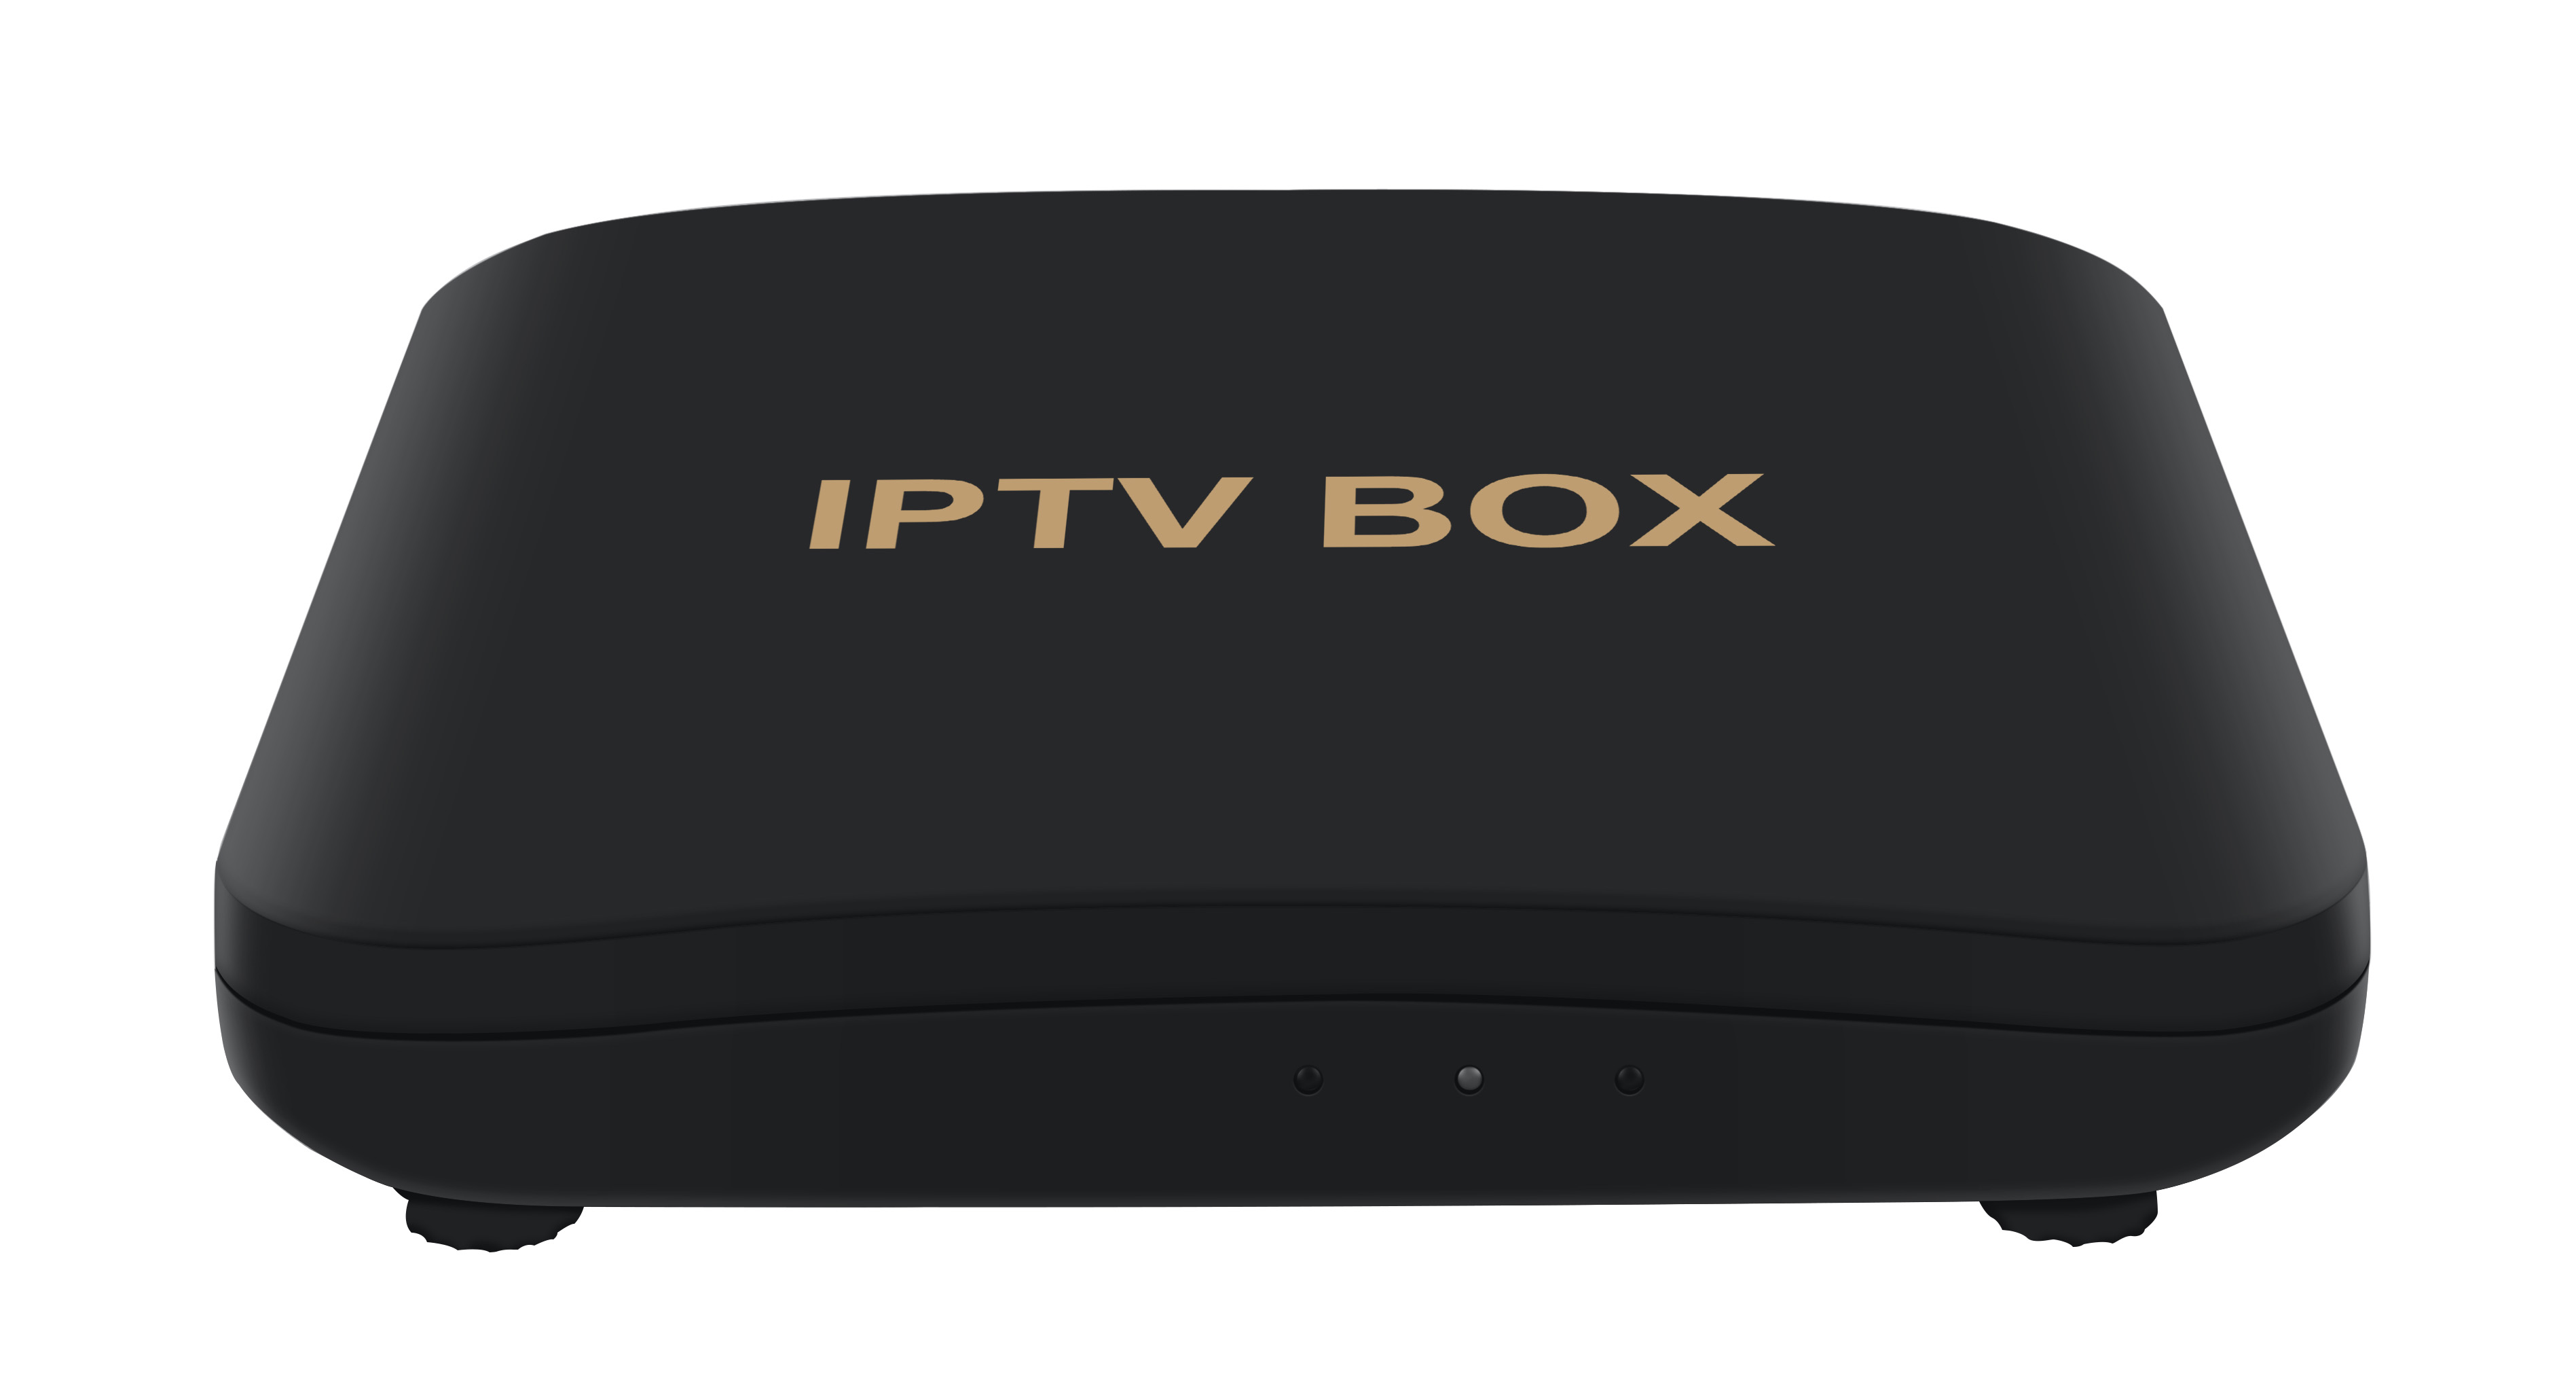 IPTV机顶盒